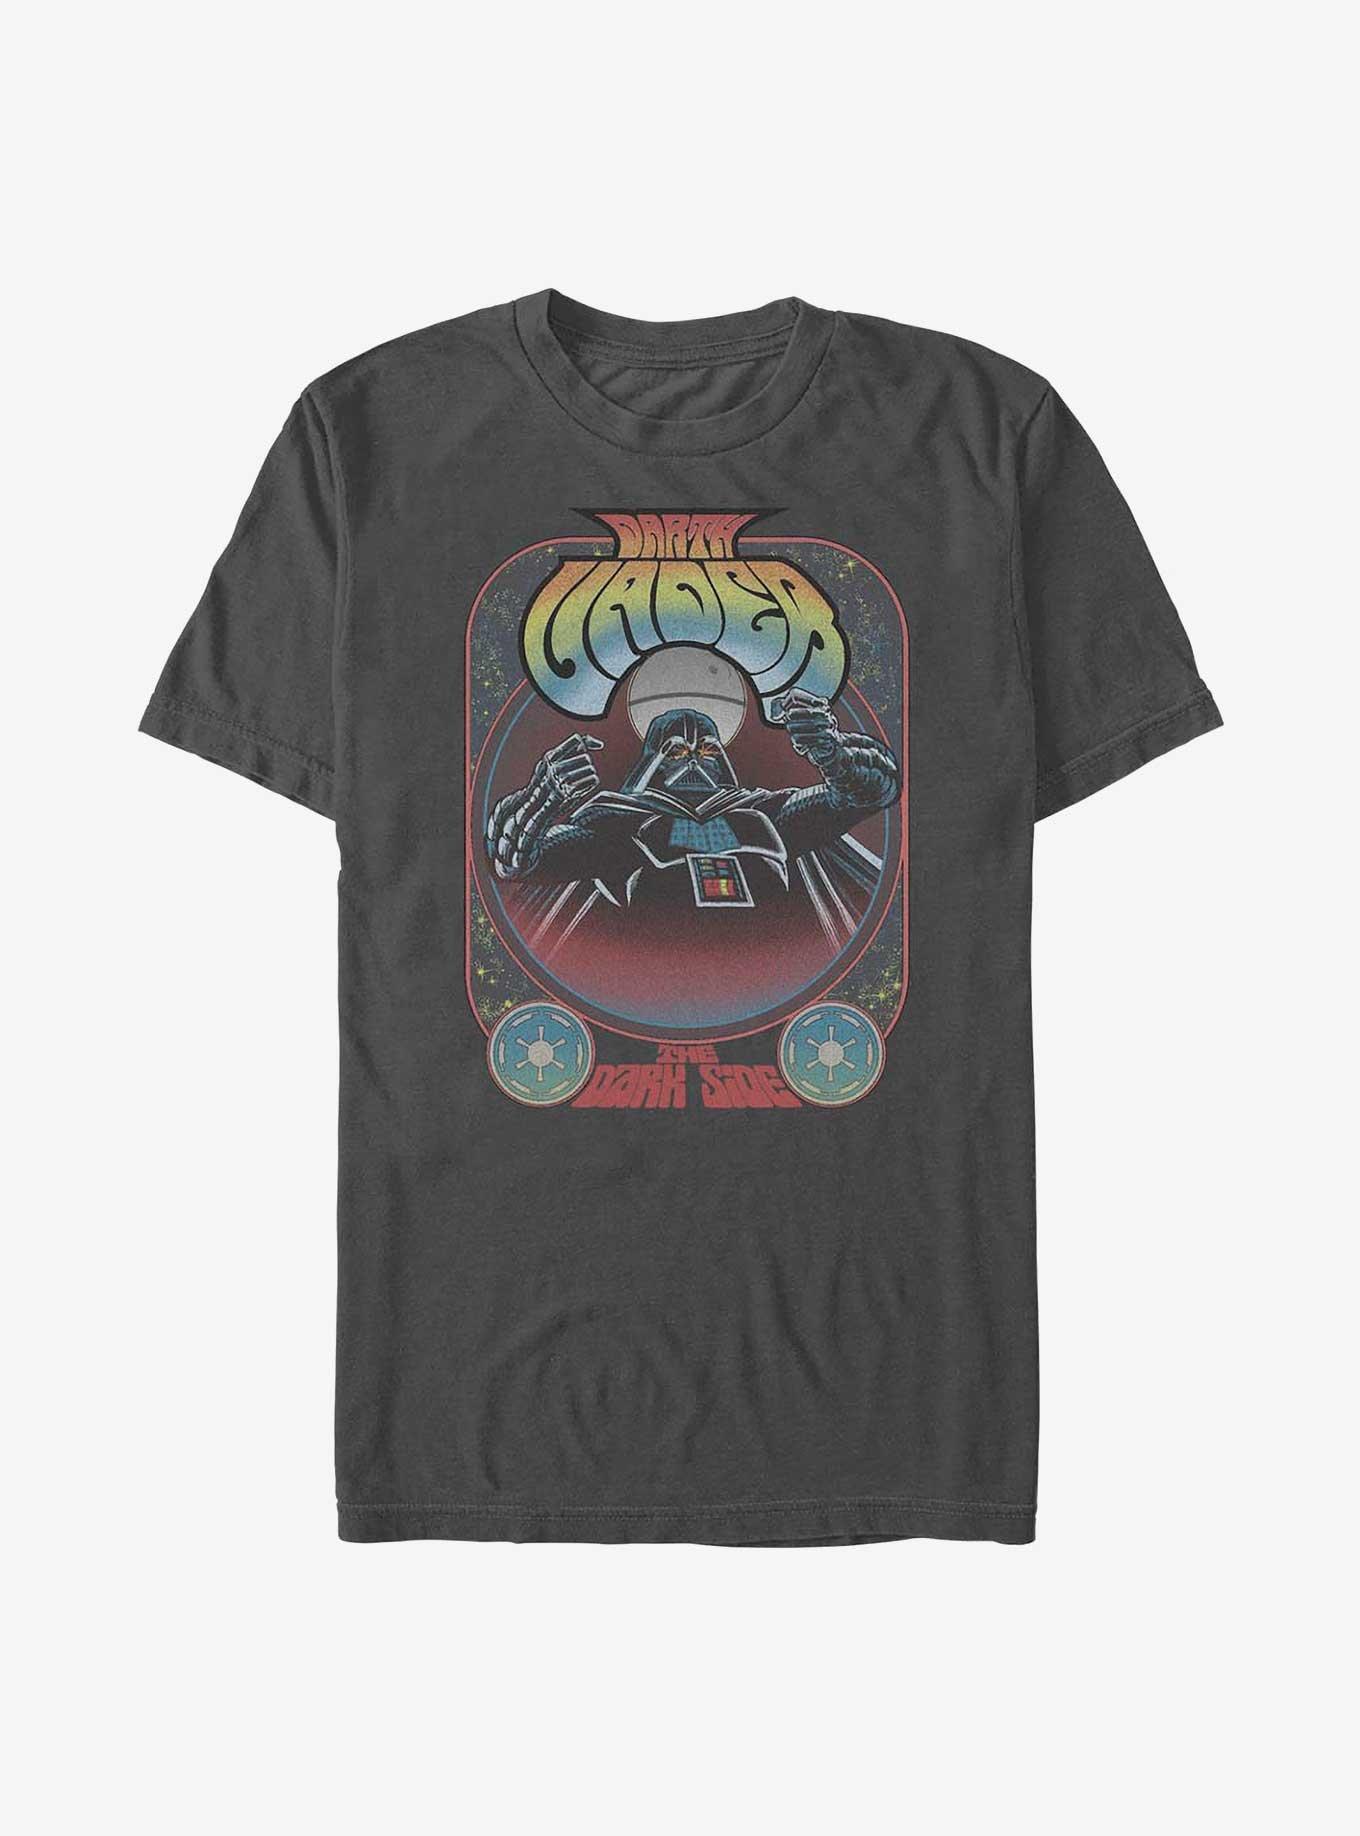 Star Wars Darth Vader T-Shirt